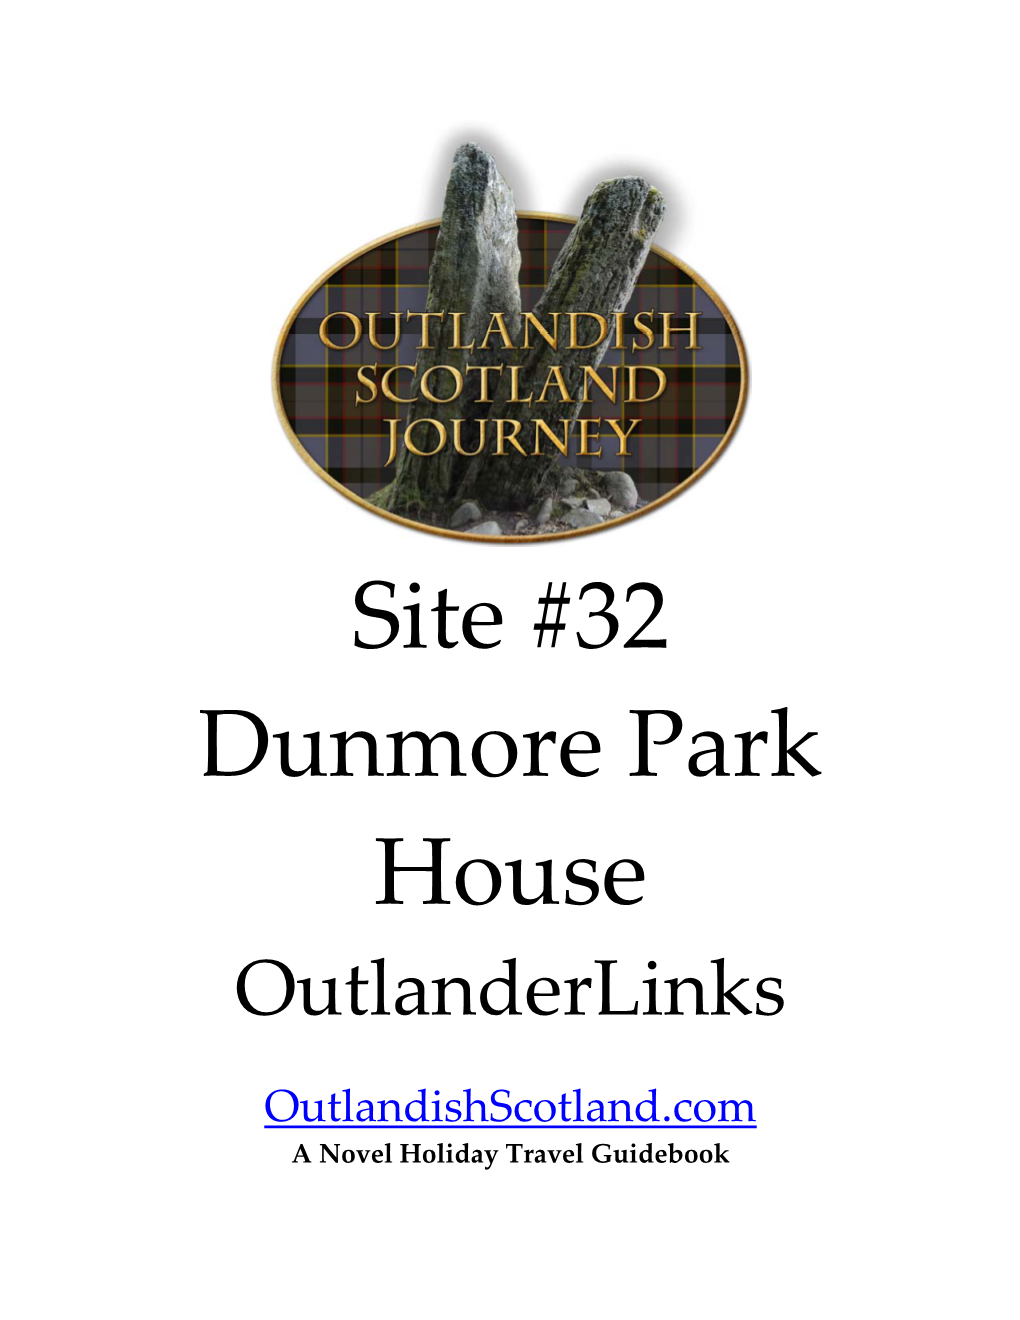 Dunmore Park House Outlanderlinks